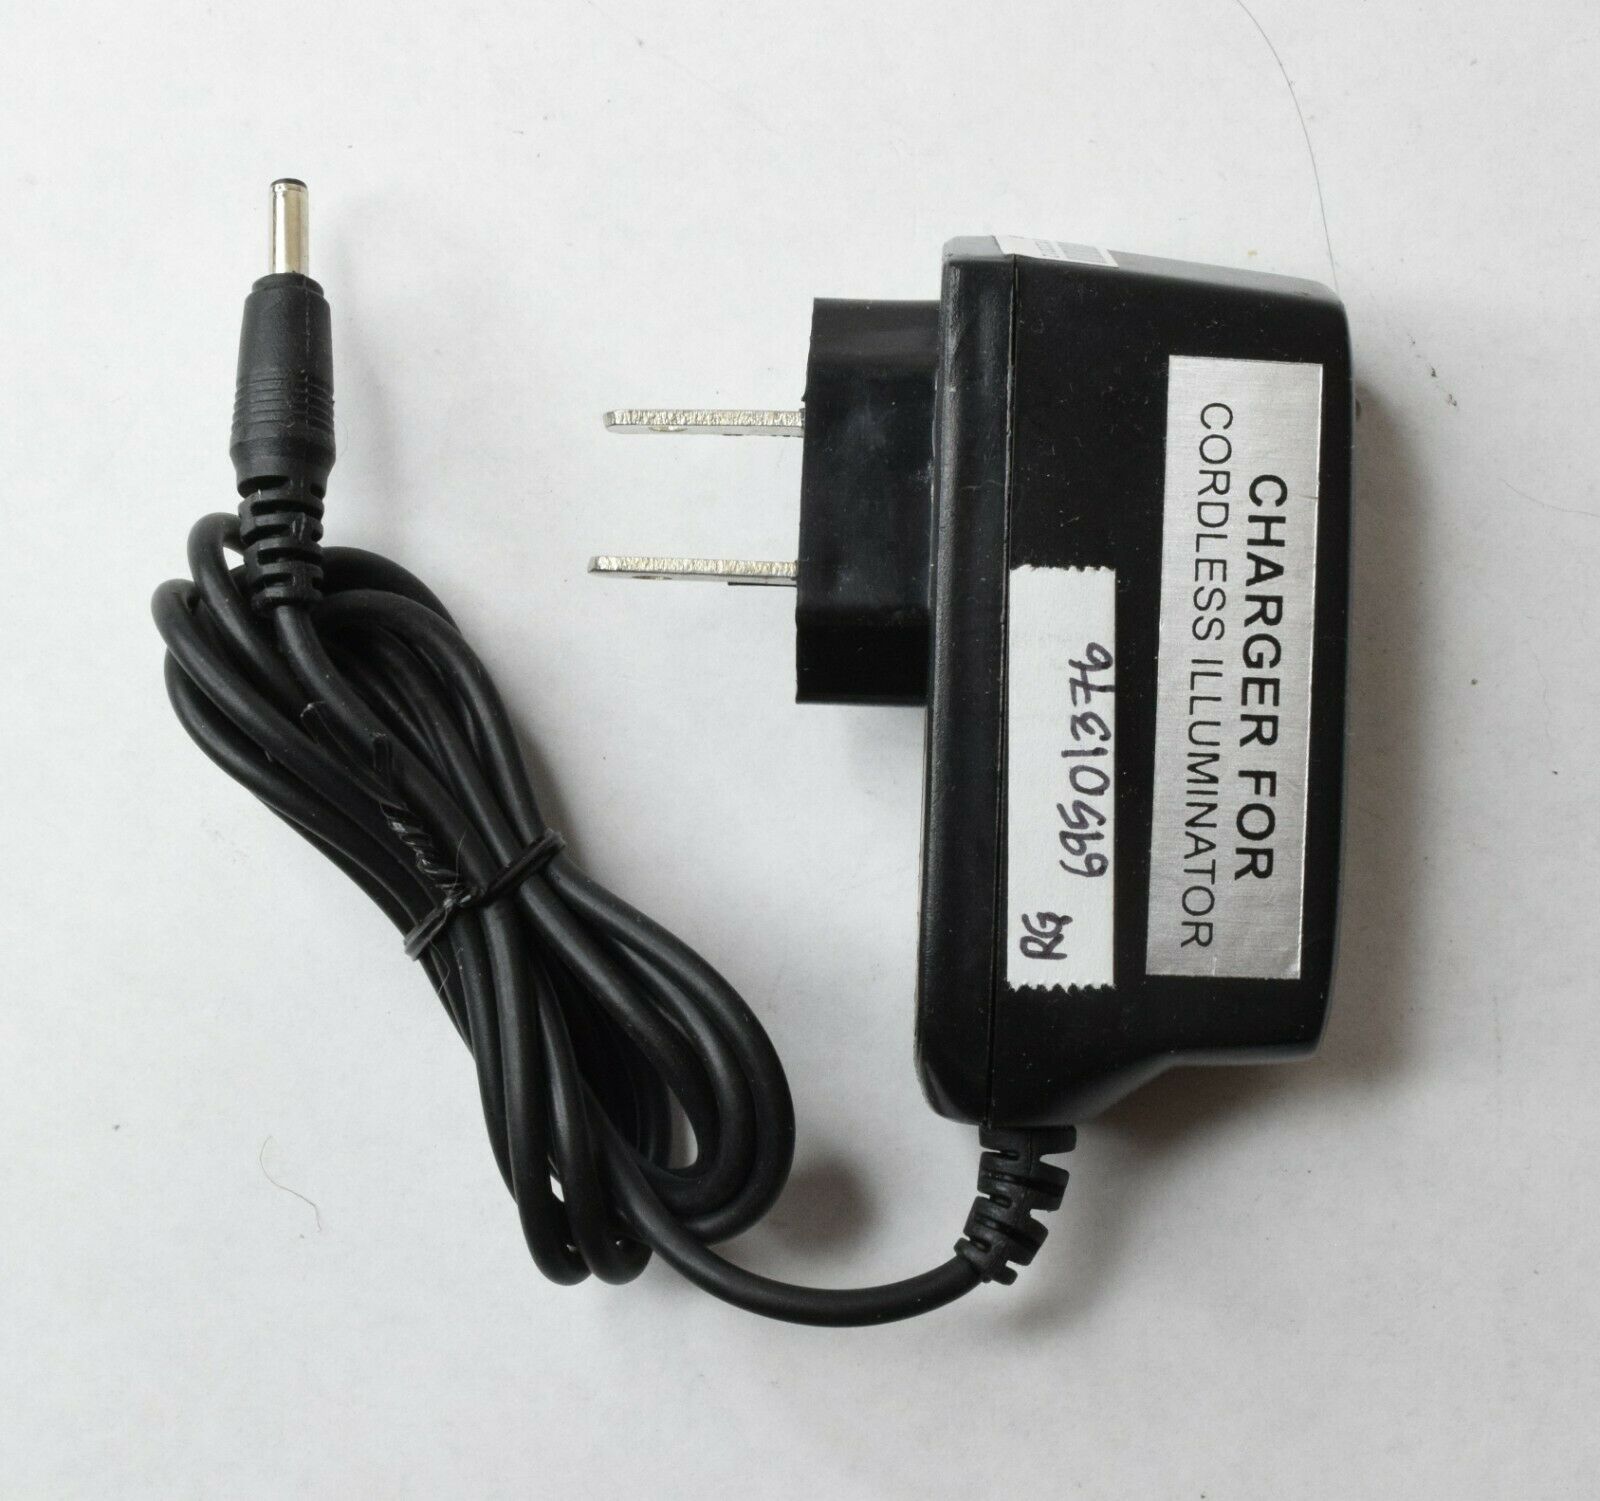 RG Cordless Illuminator Power Supply Adapter Unit 69501376 5.7V 800mA Type: Adapter Features: ne